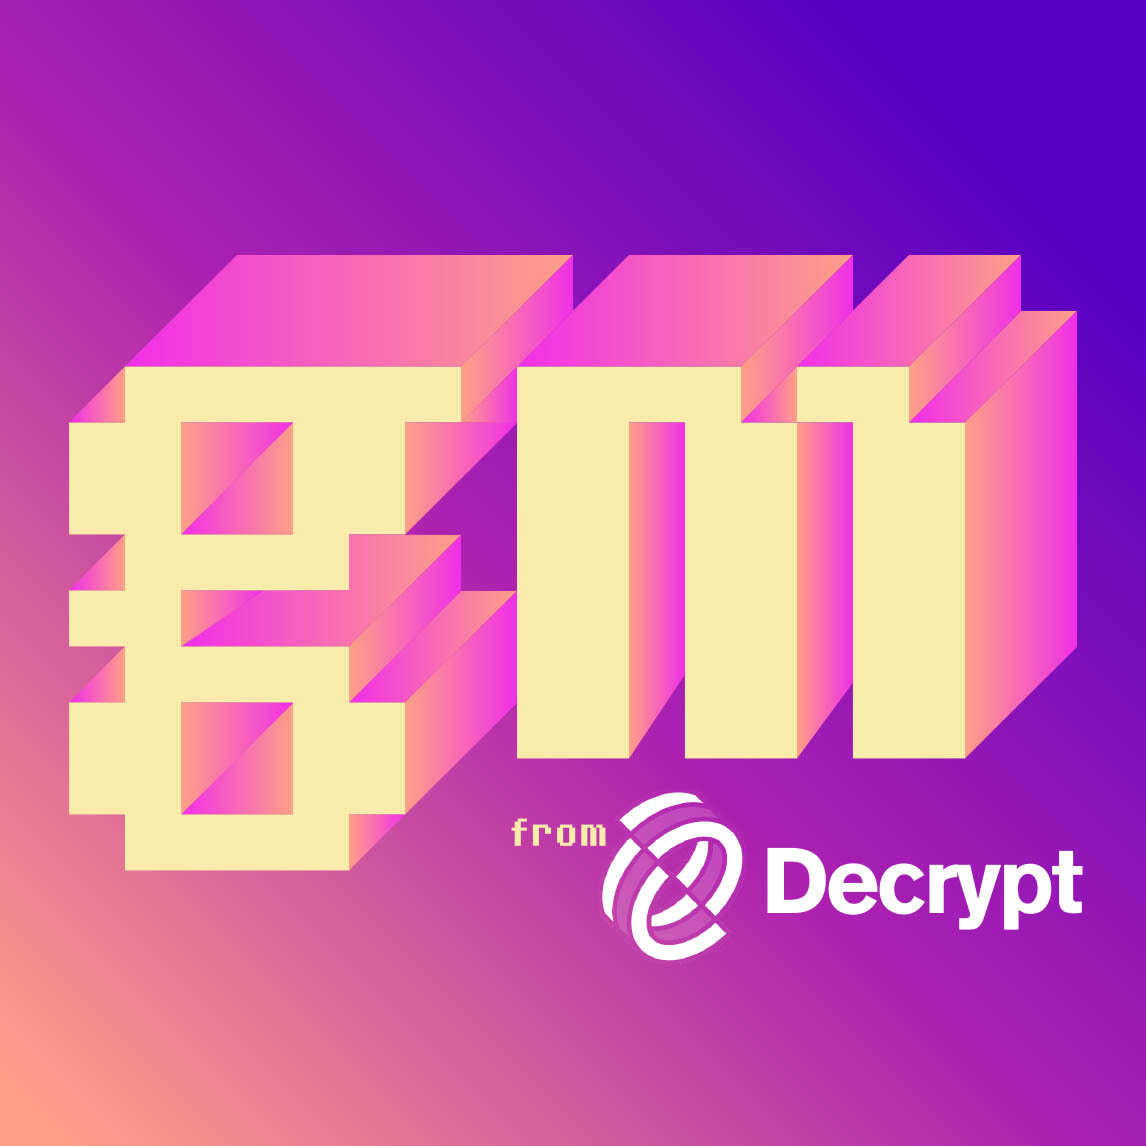 May 6: Decrypt Raises $10M & Goes Independent